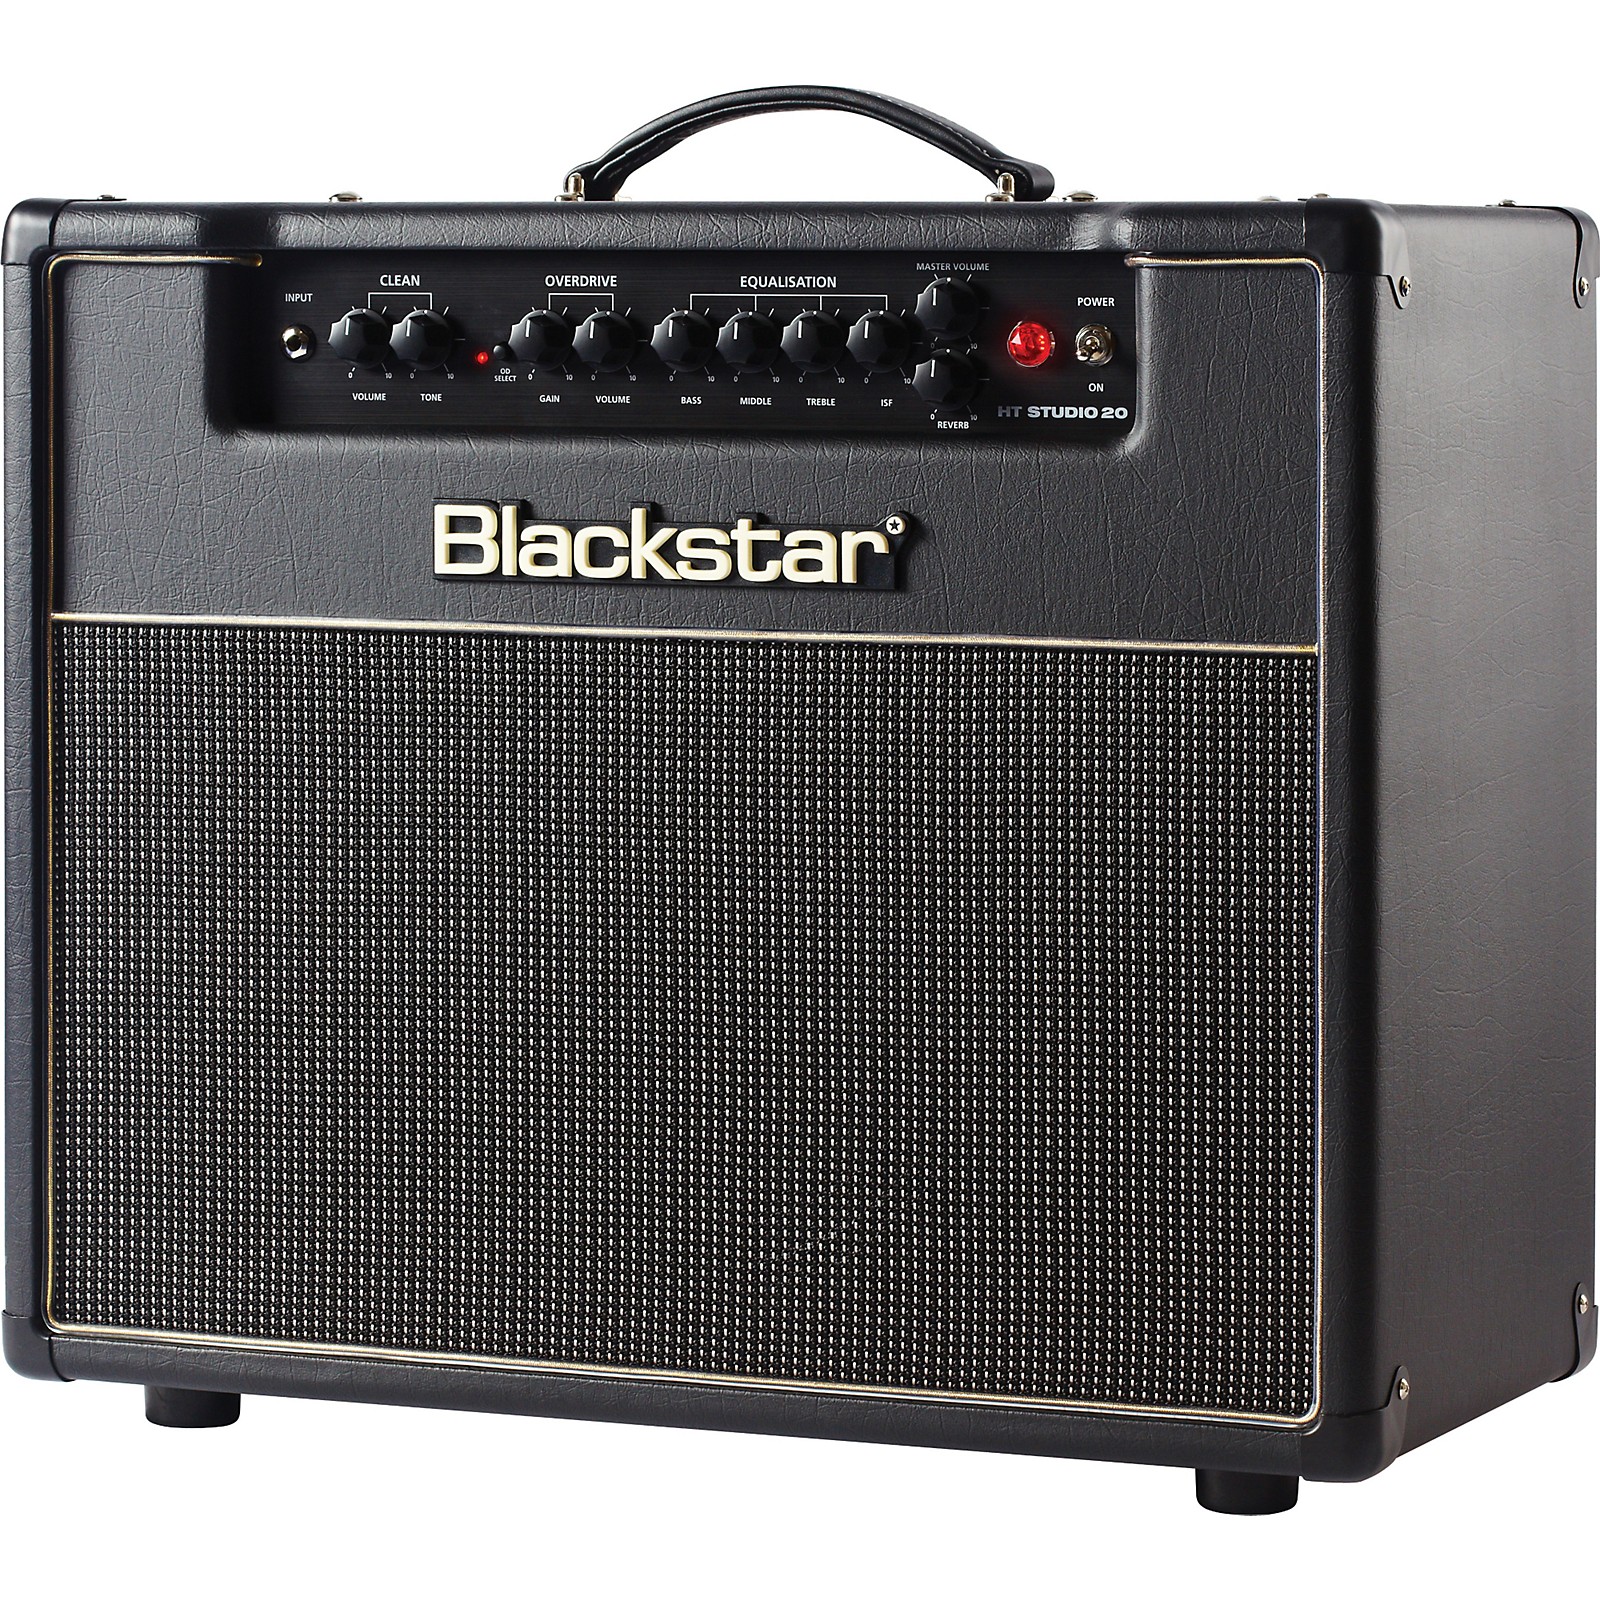 Blackstar Venue Series HT Studio 20 20W Tube Guitar Combo Amp